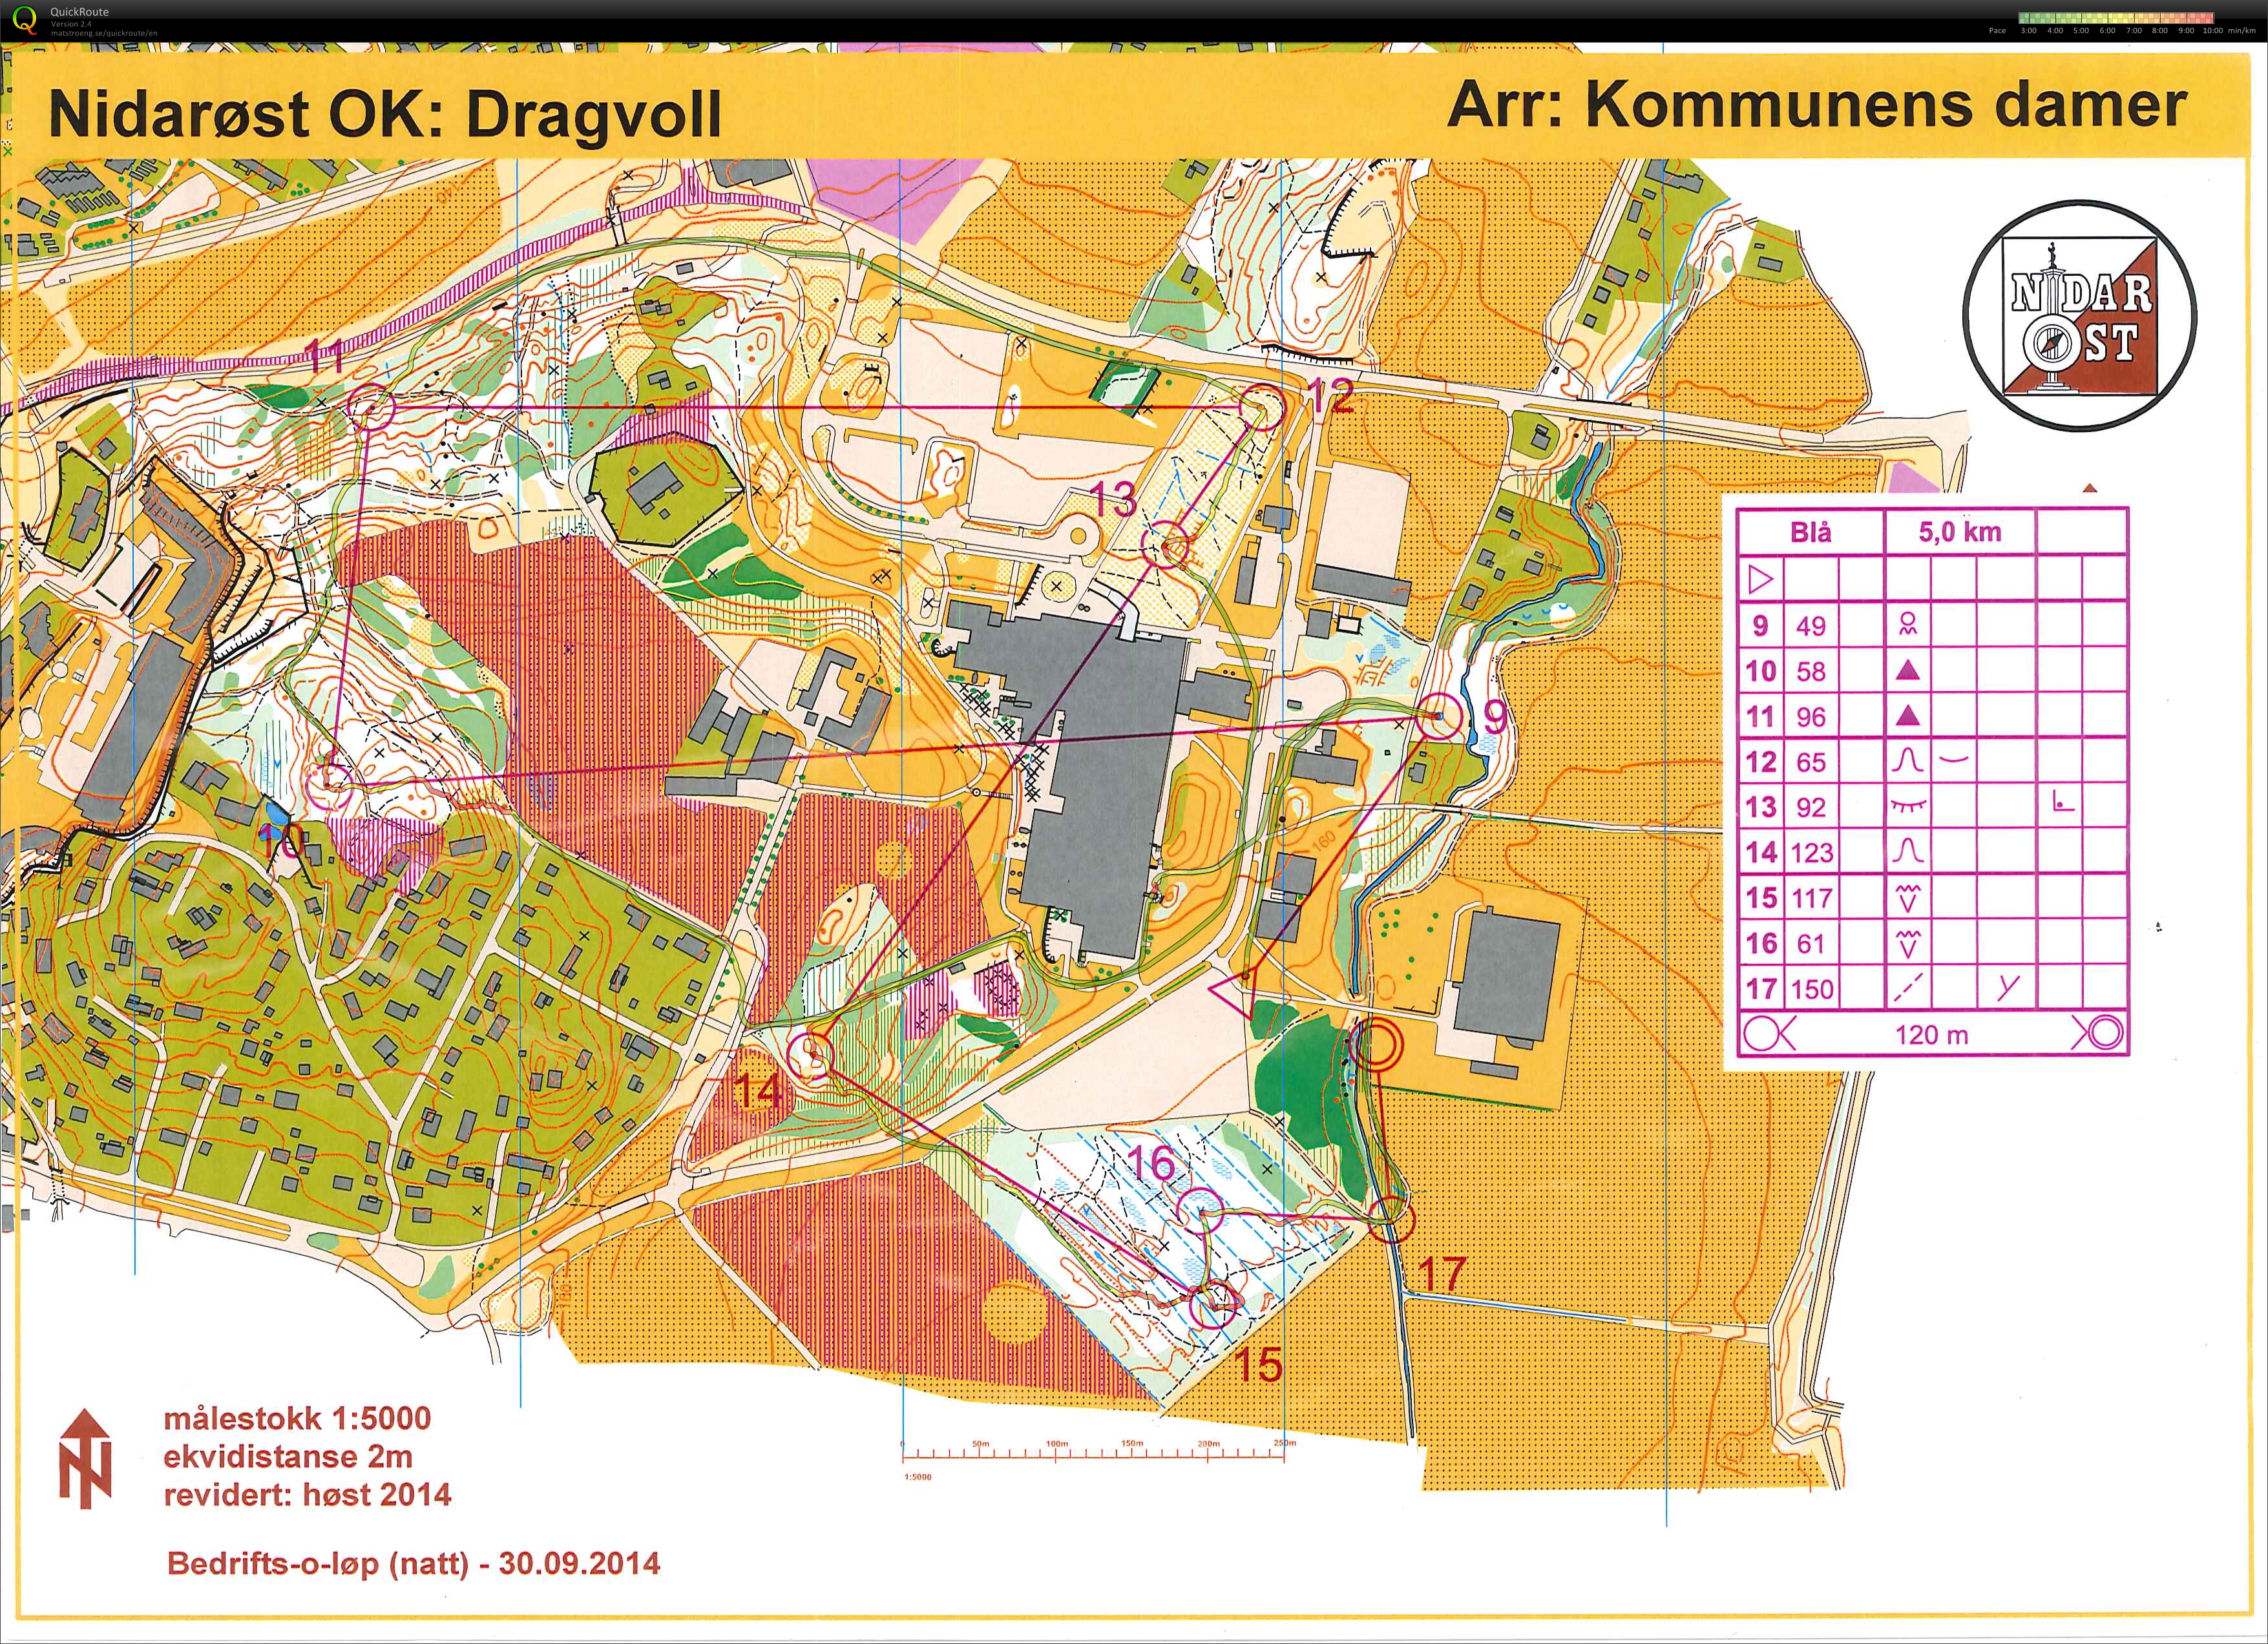 Bedrifts o-løp natt Dragvoll, del 2 (30-09-2014)